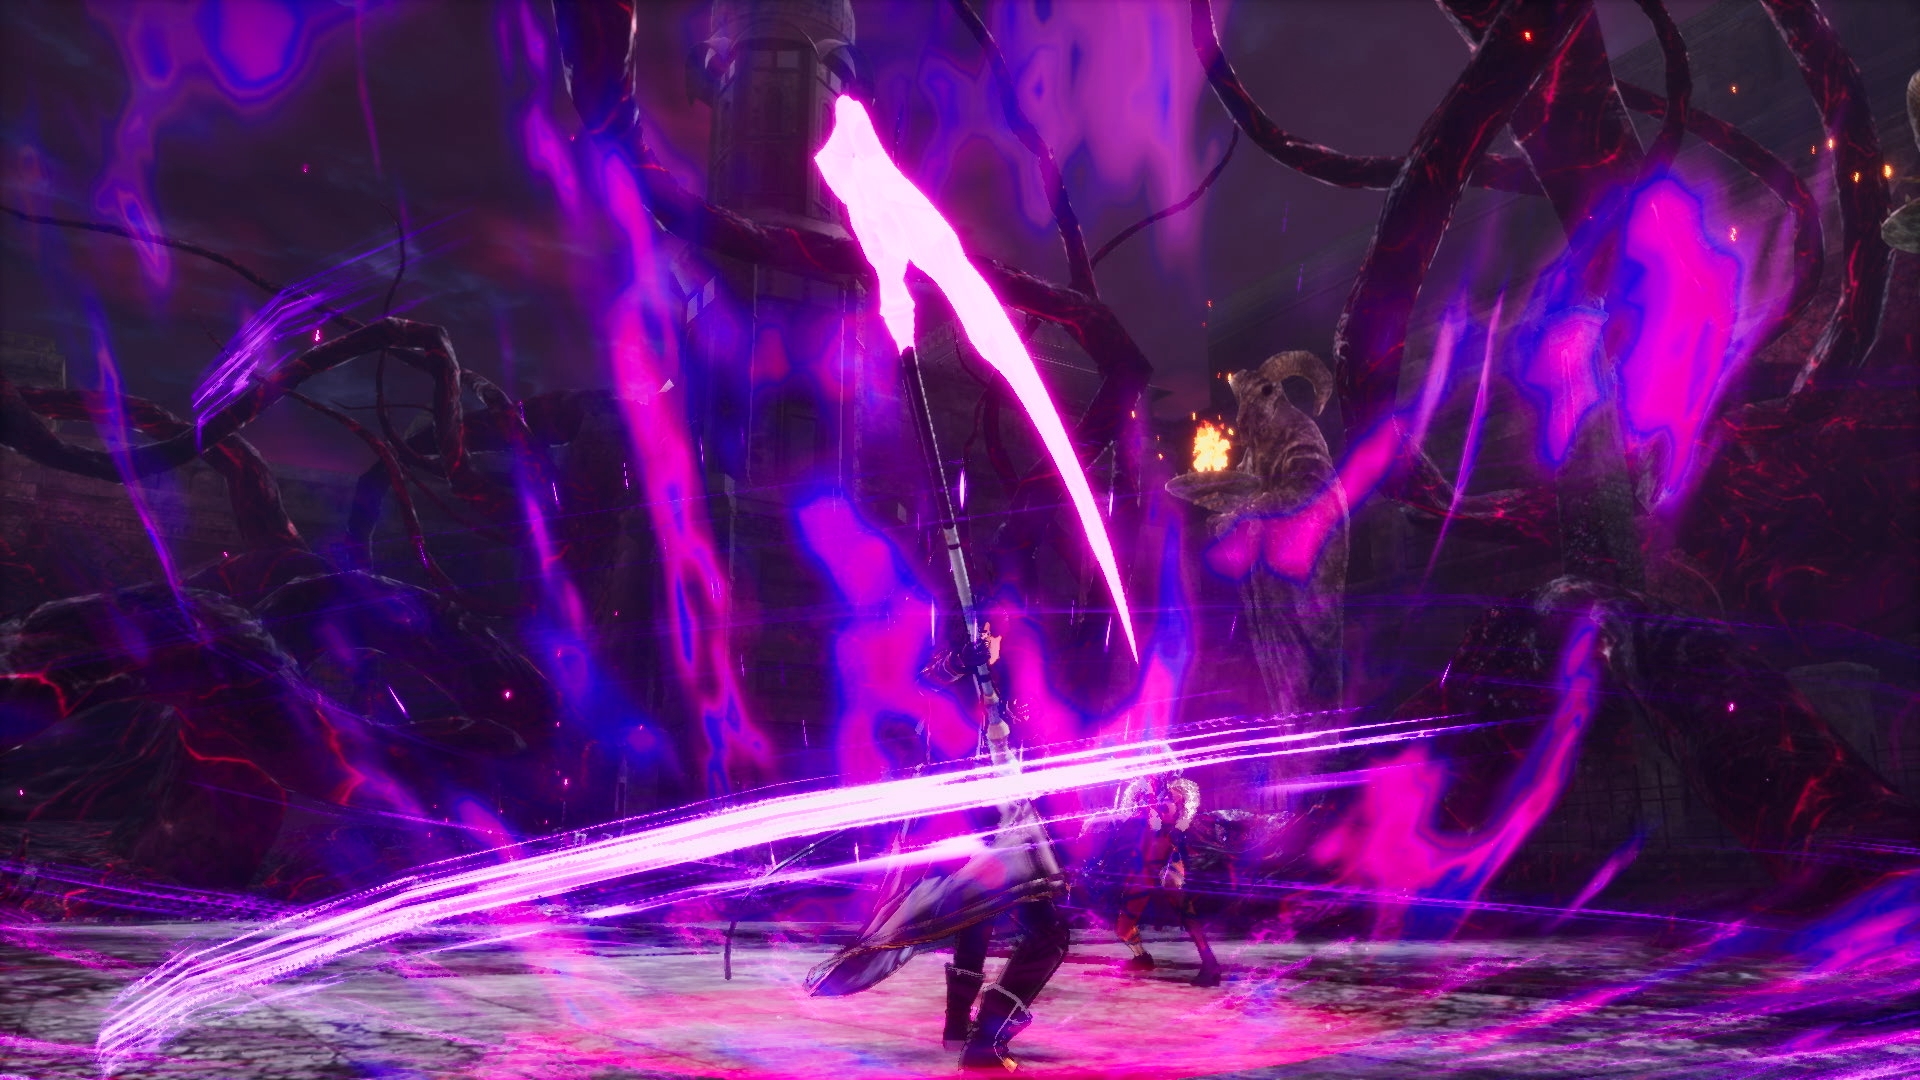 Sword Art Online 10th Anniversary Project Reveals Final Trailer